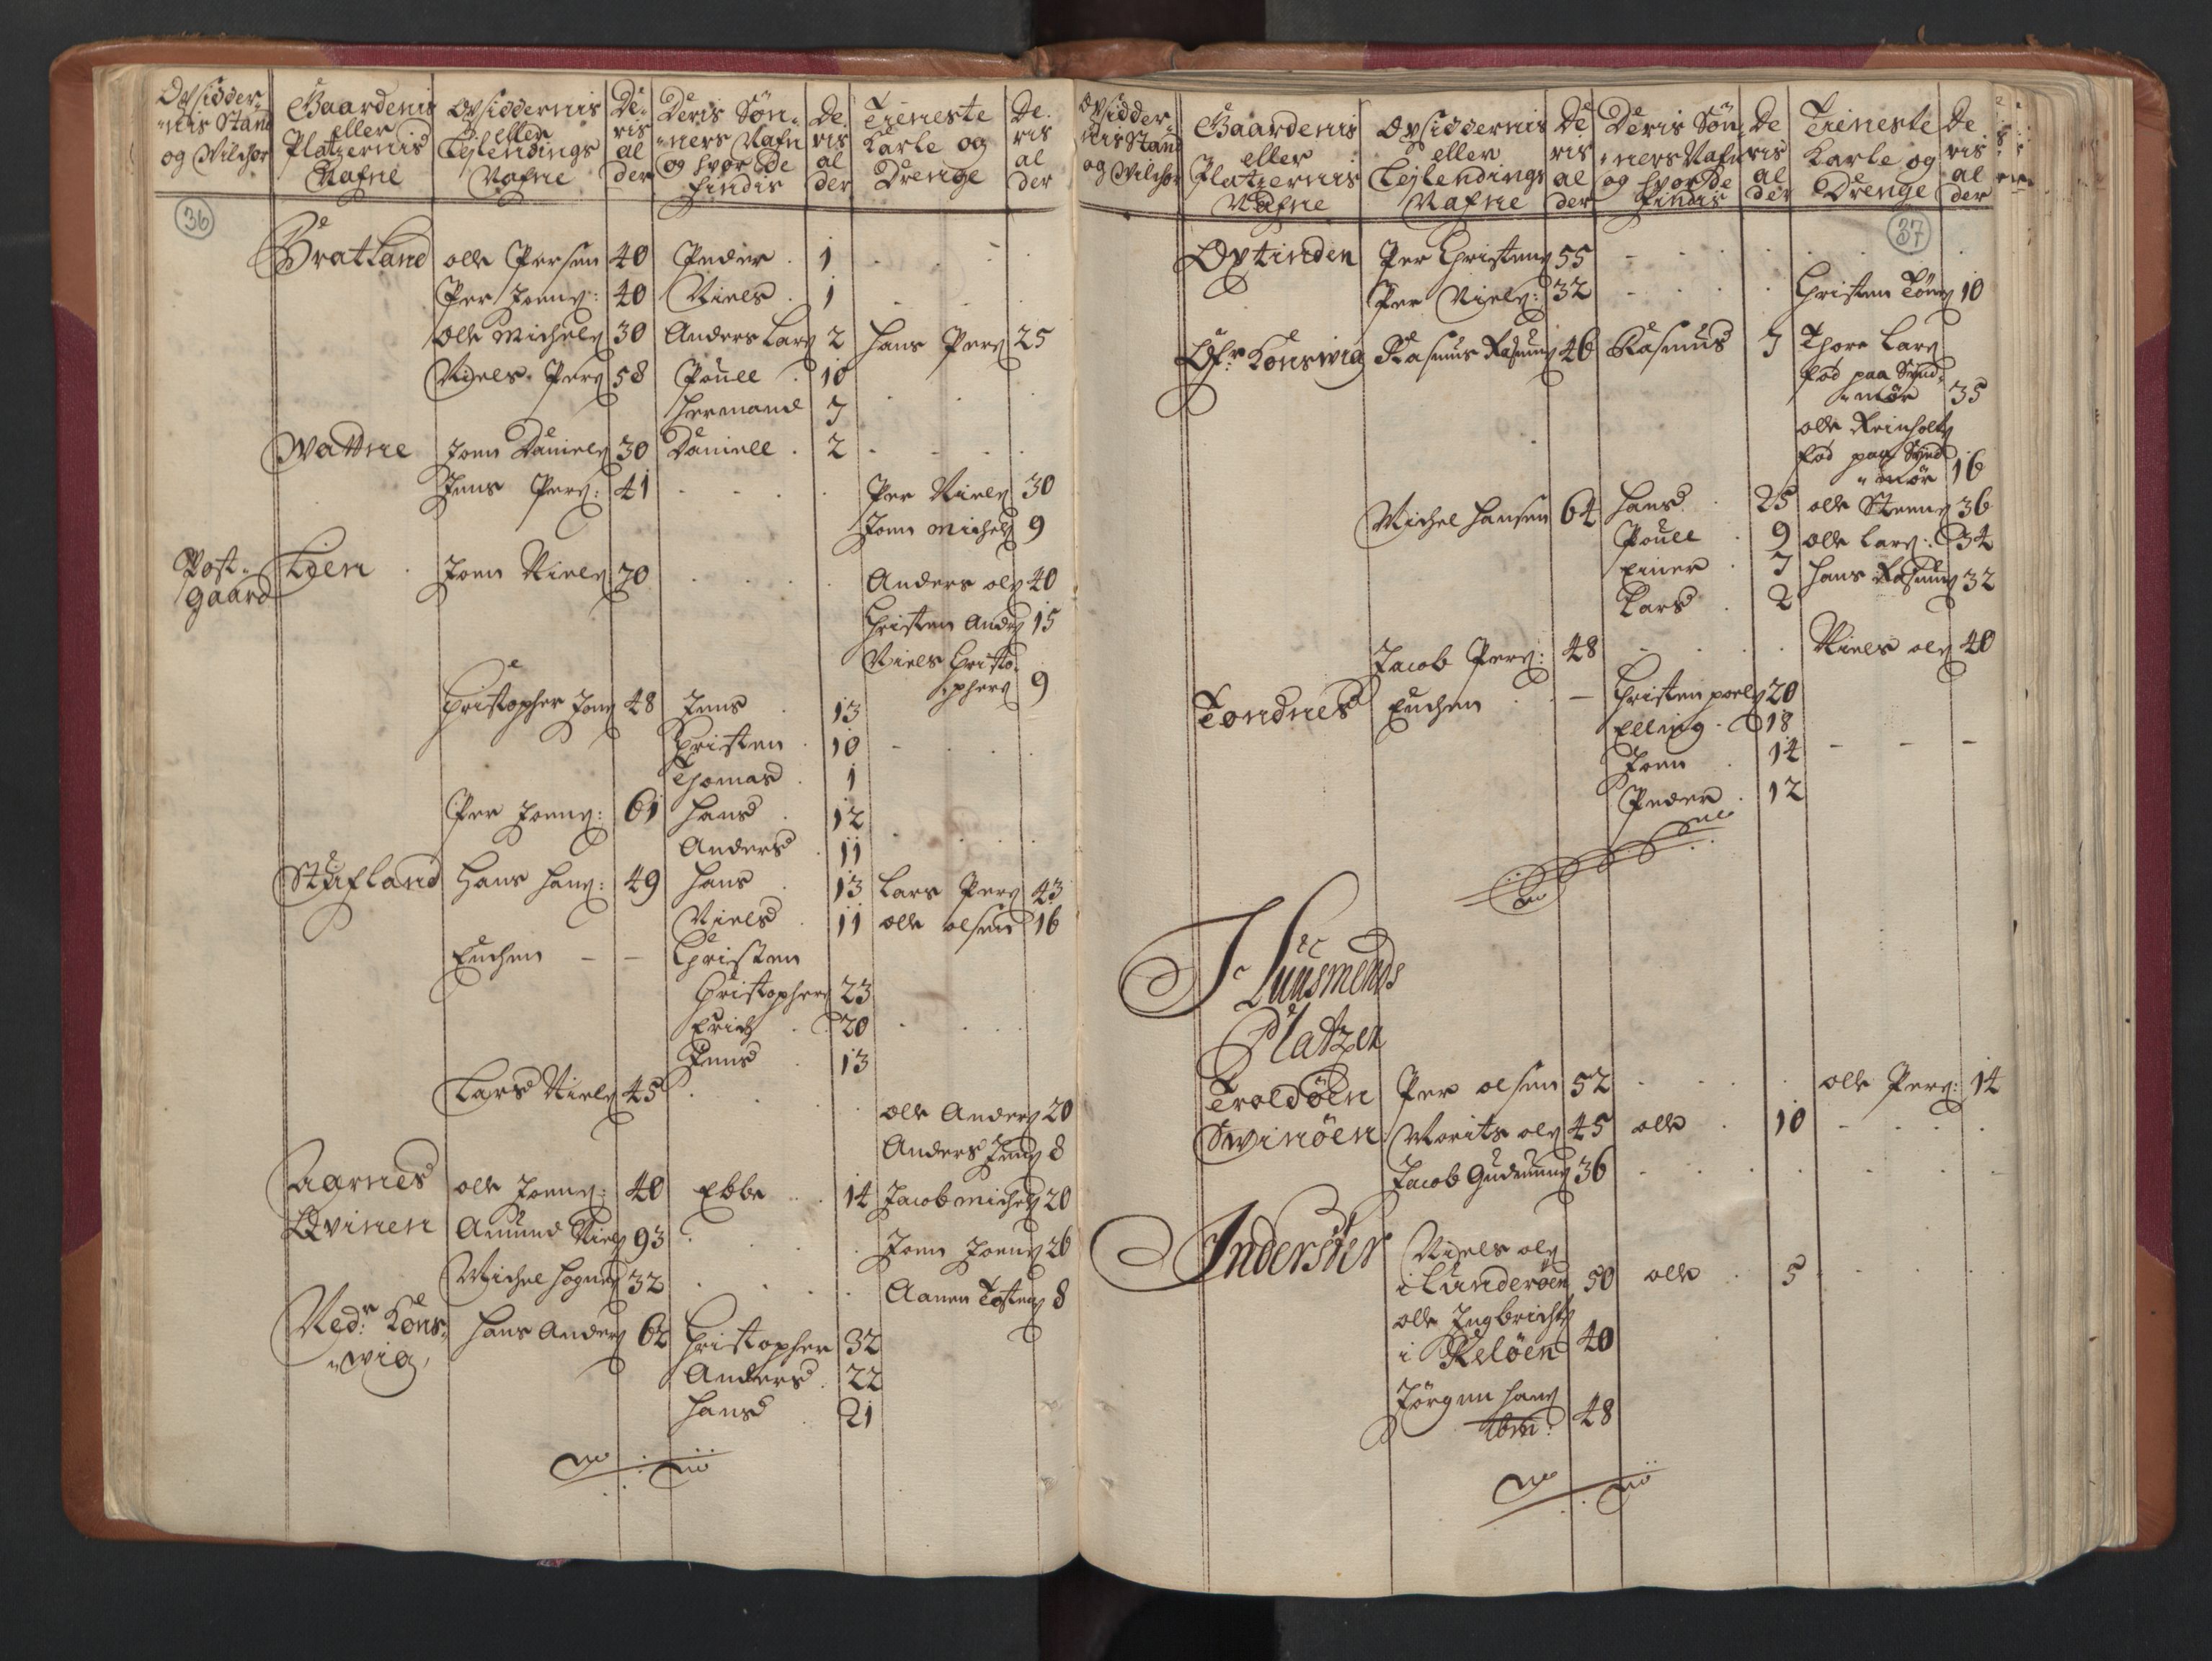 RA, Census (manntall) 1701, no. 16: Helgeland fogderi, 1701, p. 36-37